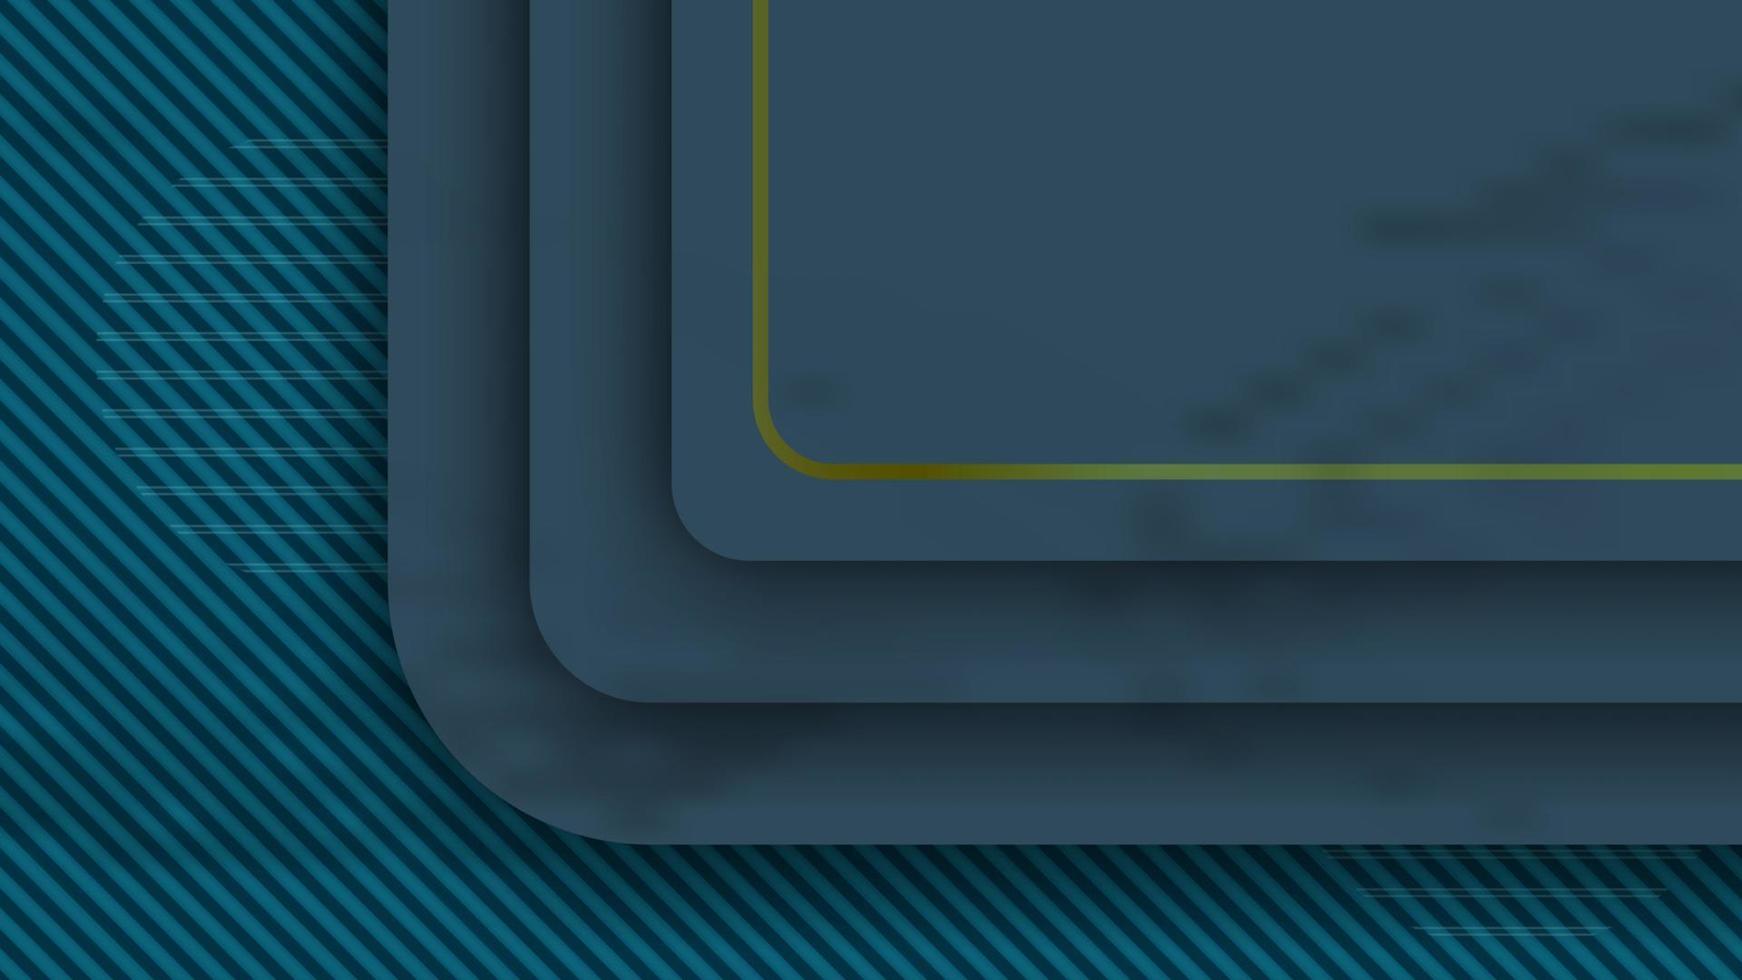 fondo de presentación abstracta de curva de onda moderna. fondo de corte de papel de lujo. patrón dorado abstracto fondo azul oscuro vector